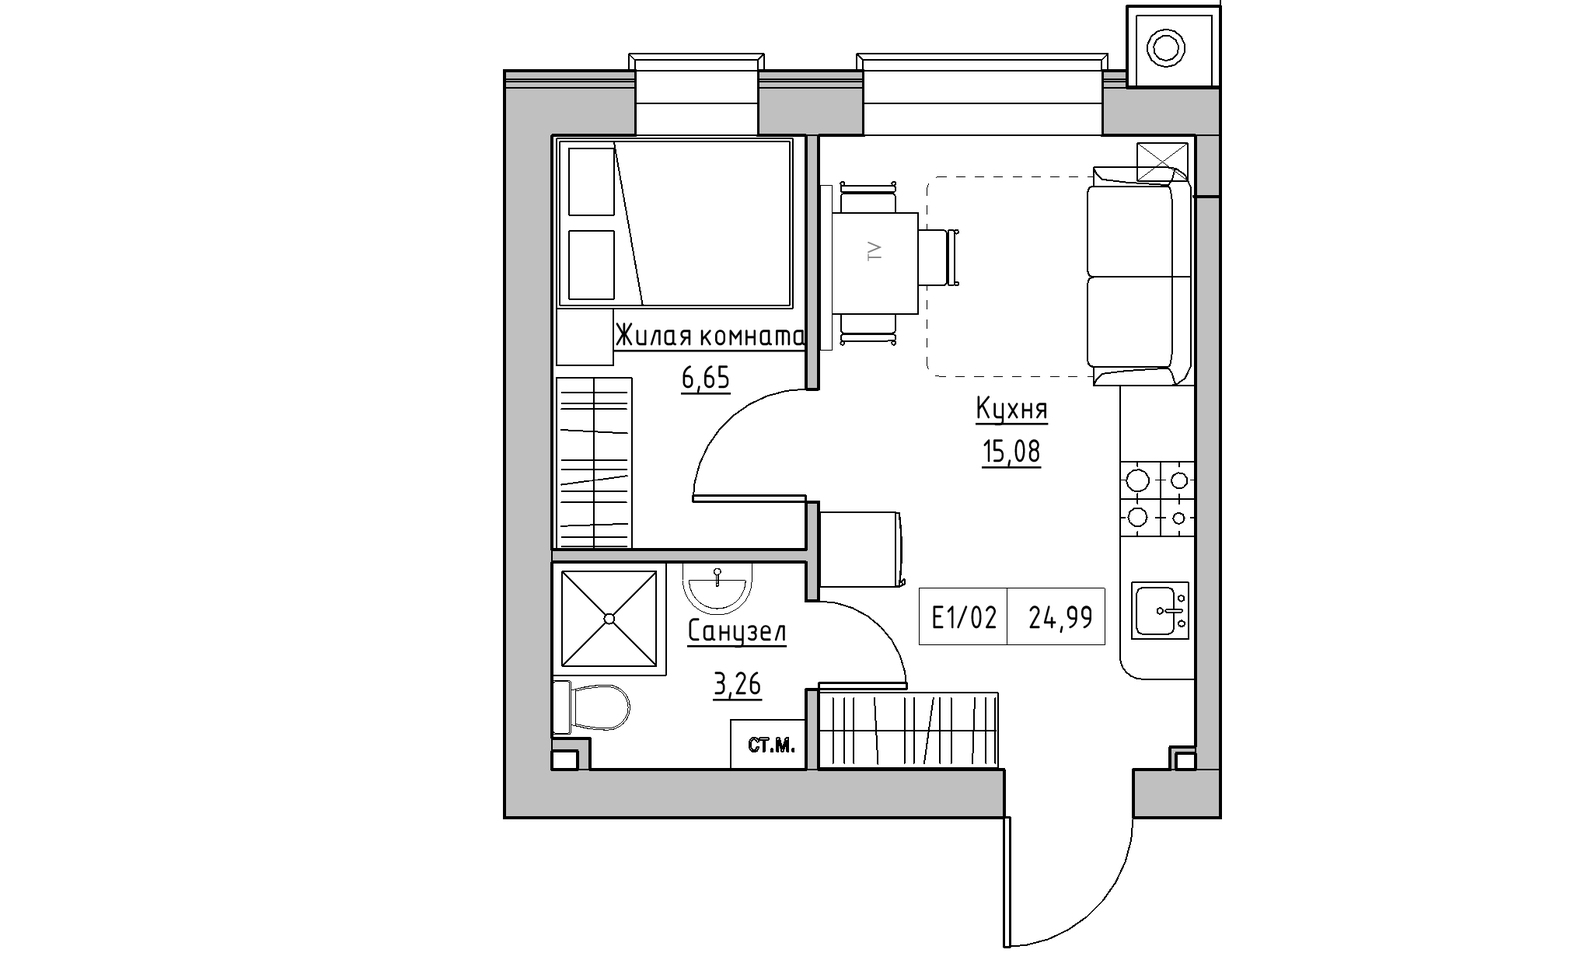 Planning 1-rm flats area 24.99m2, KS-014-04/0004.